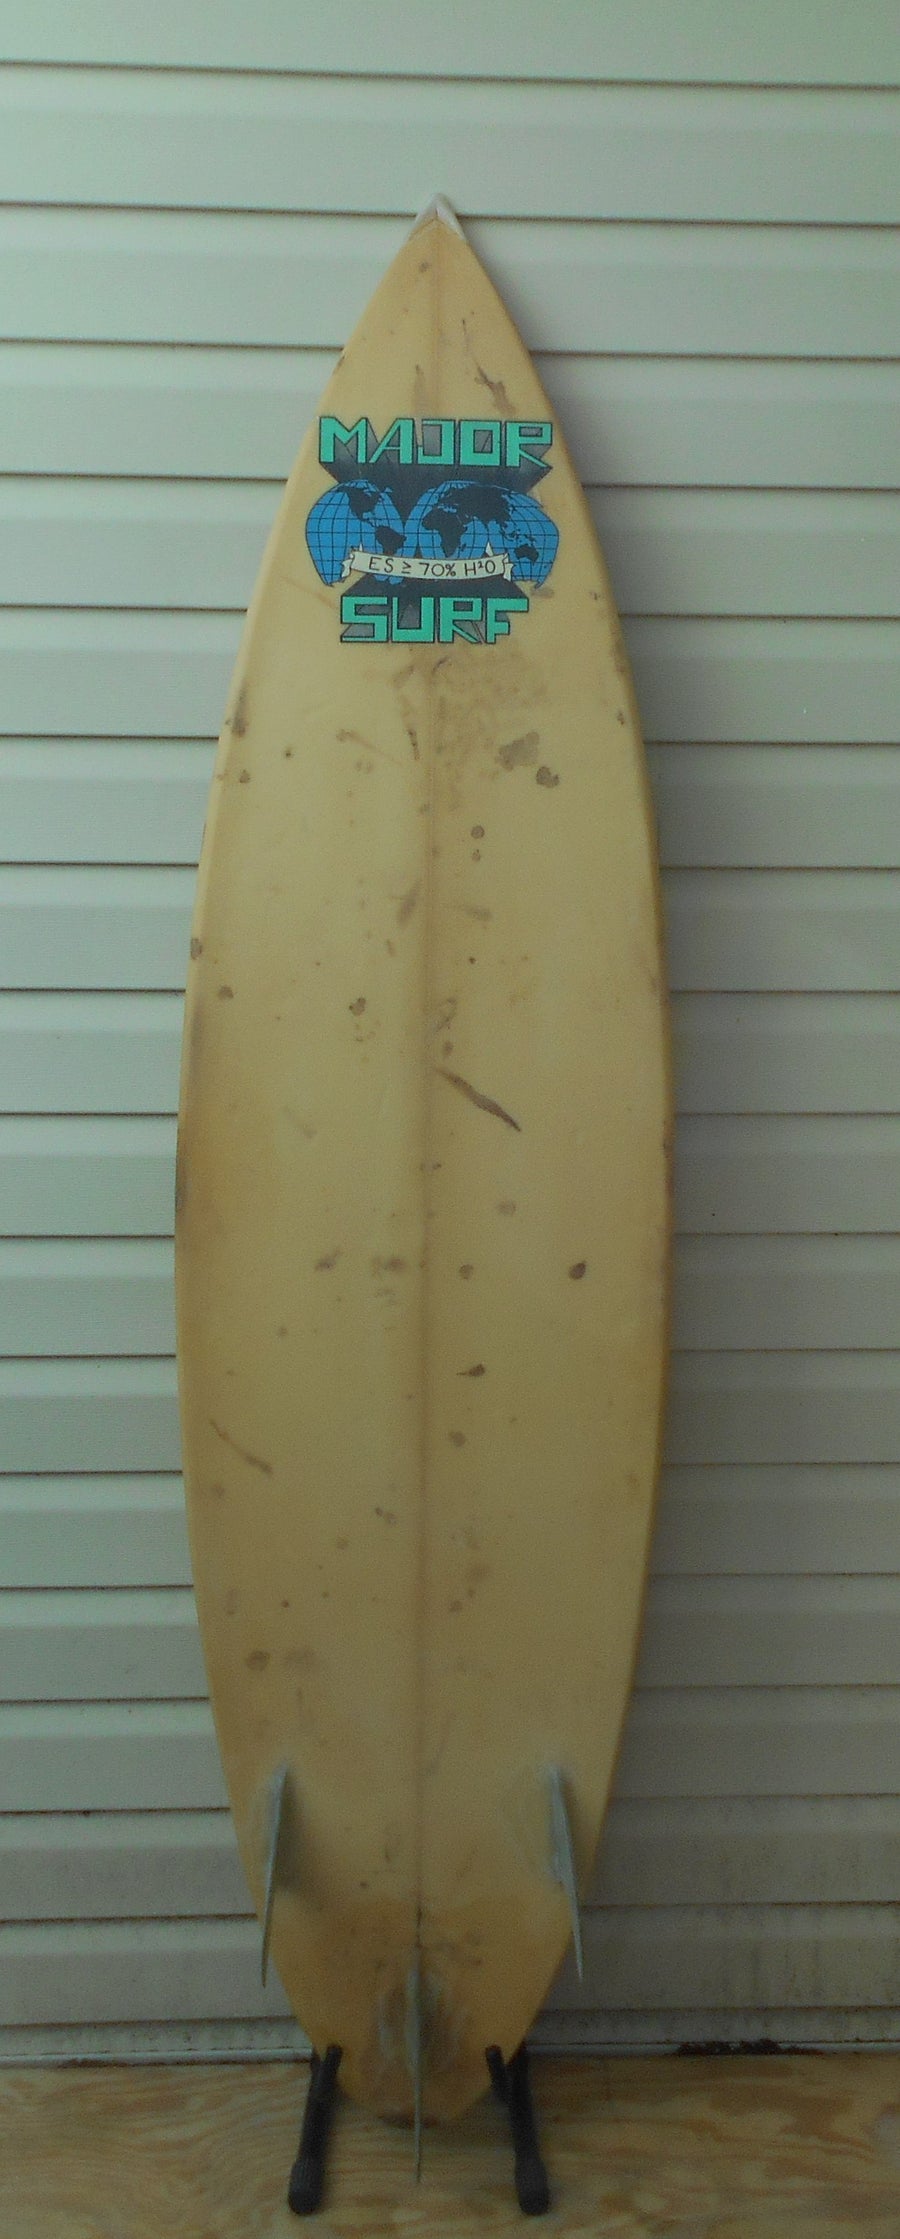 Major Surf Vintage Pintail 6'5